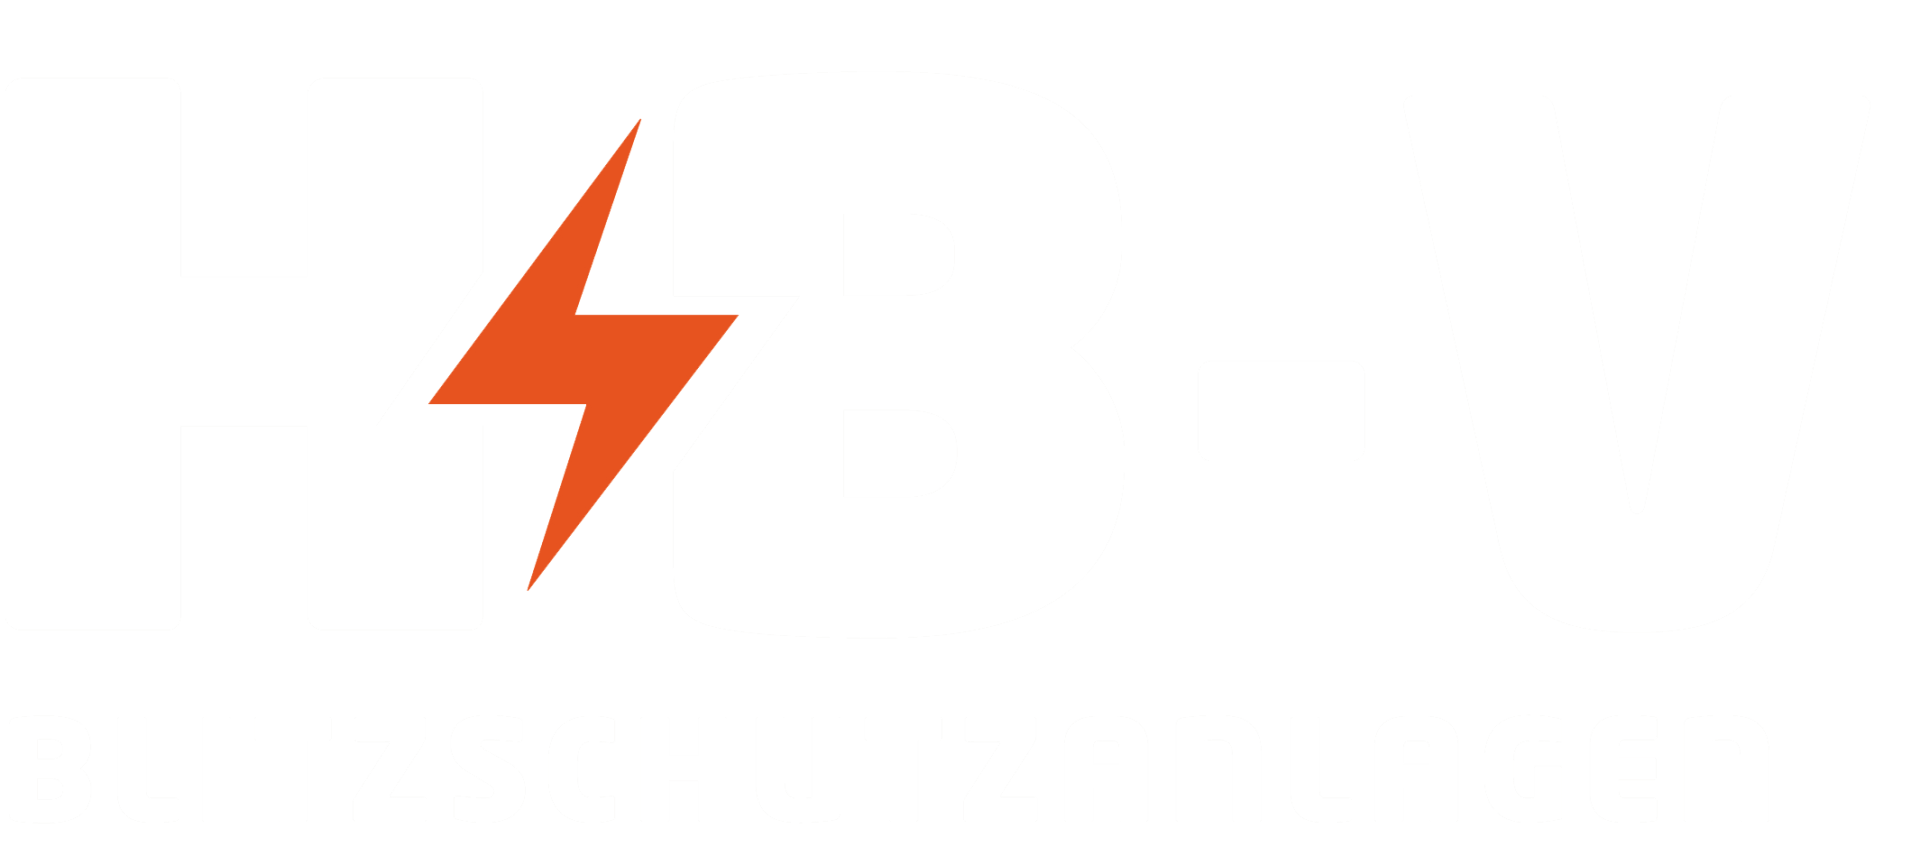 HB-V Blitzschutzanlagen - Logo